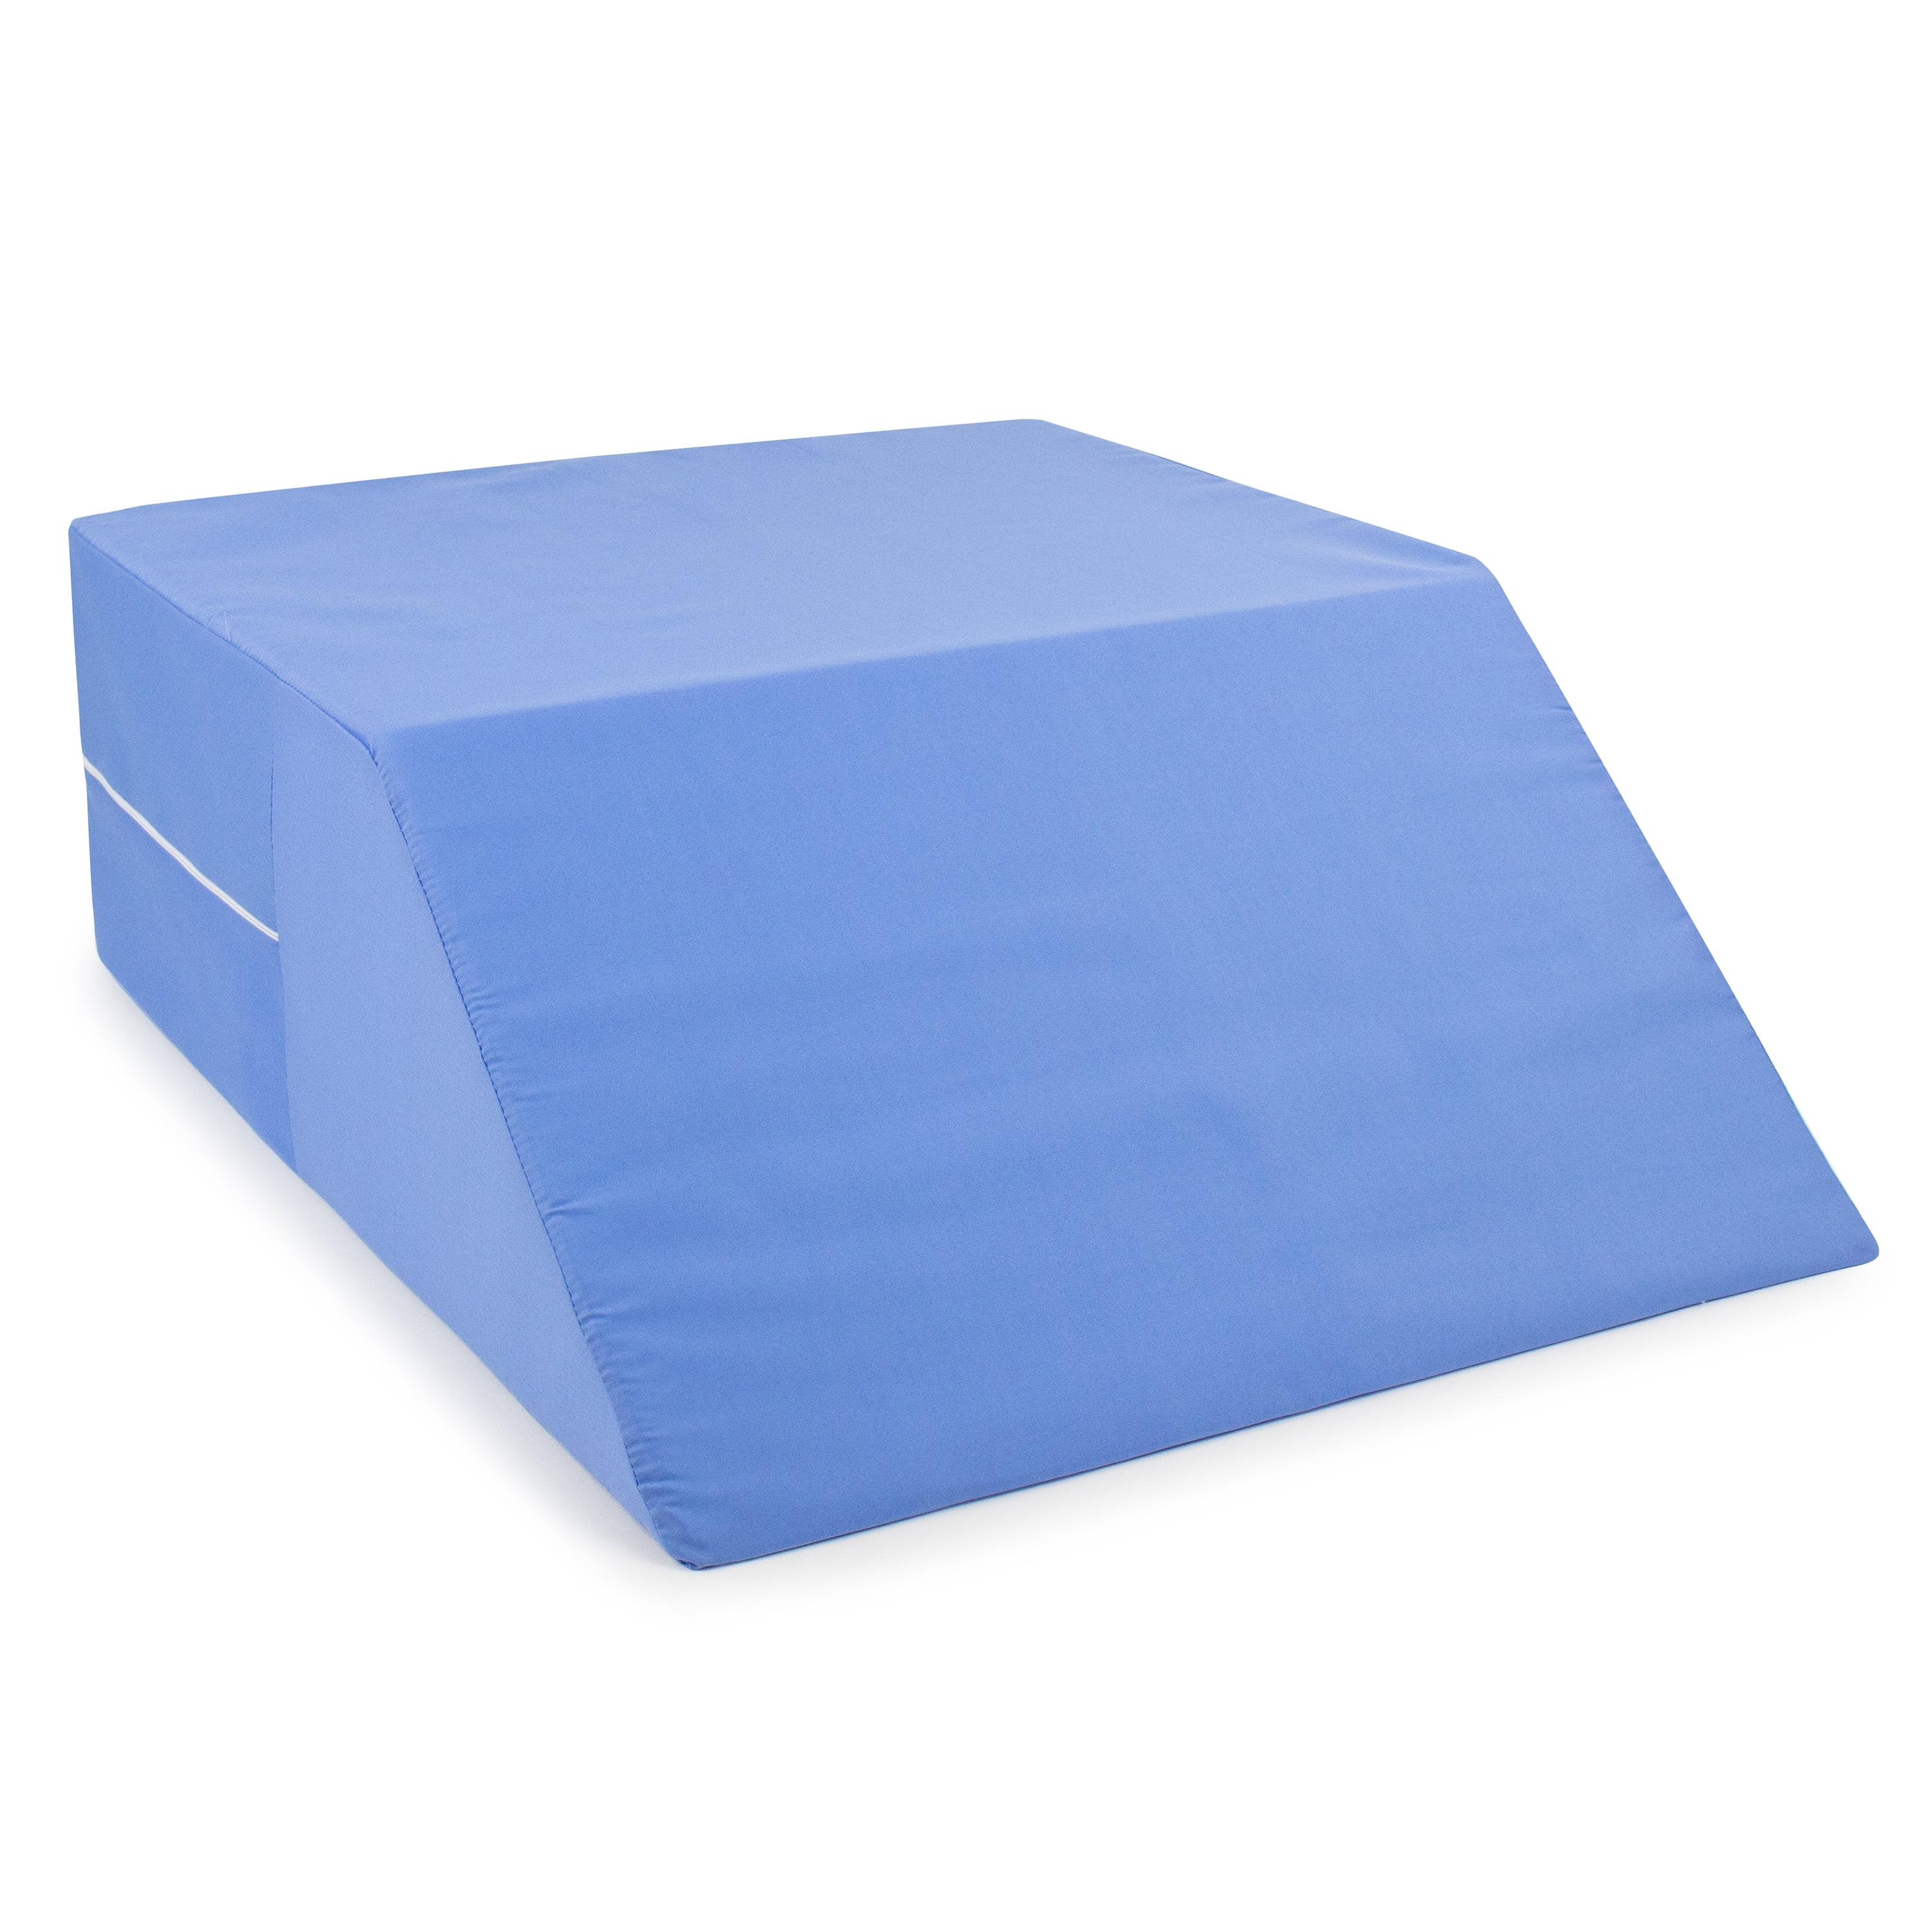 Blue Ortho Bed Wedge Elevated Leg Pillow Foam Injury Support Washable Cushion 